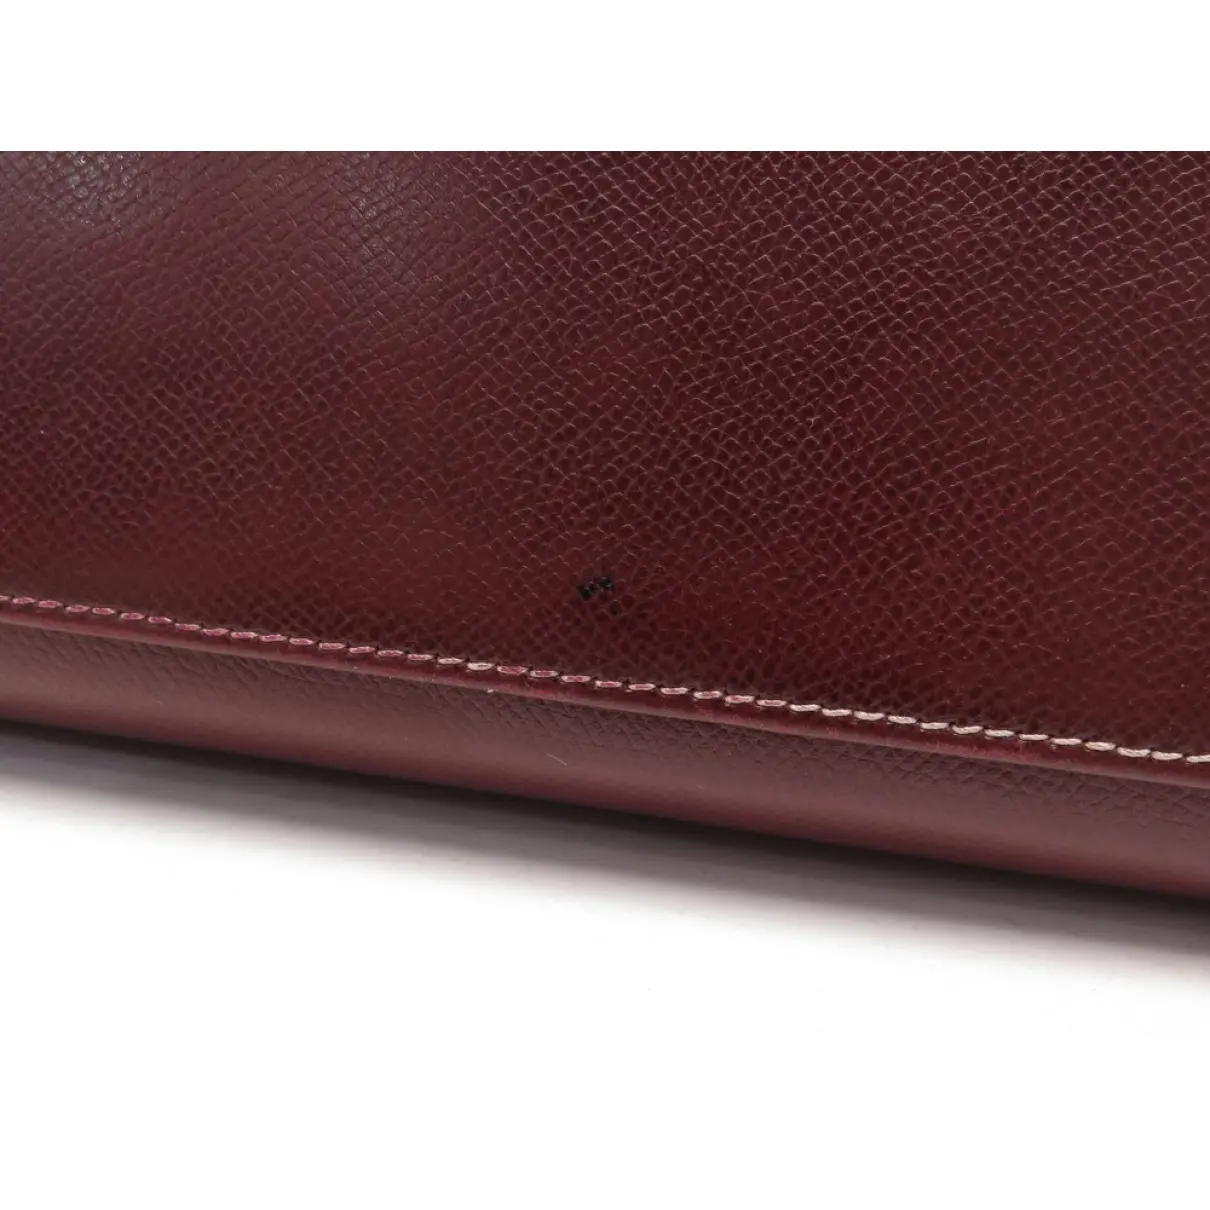 Dalvy leather handbag Hermès